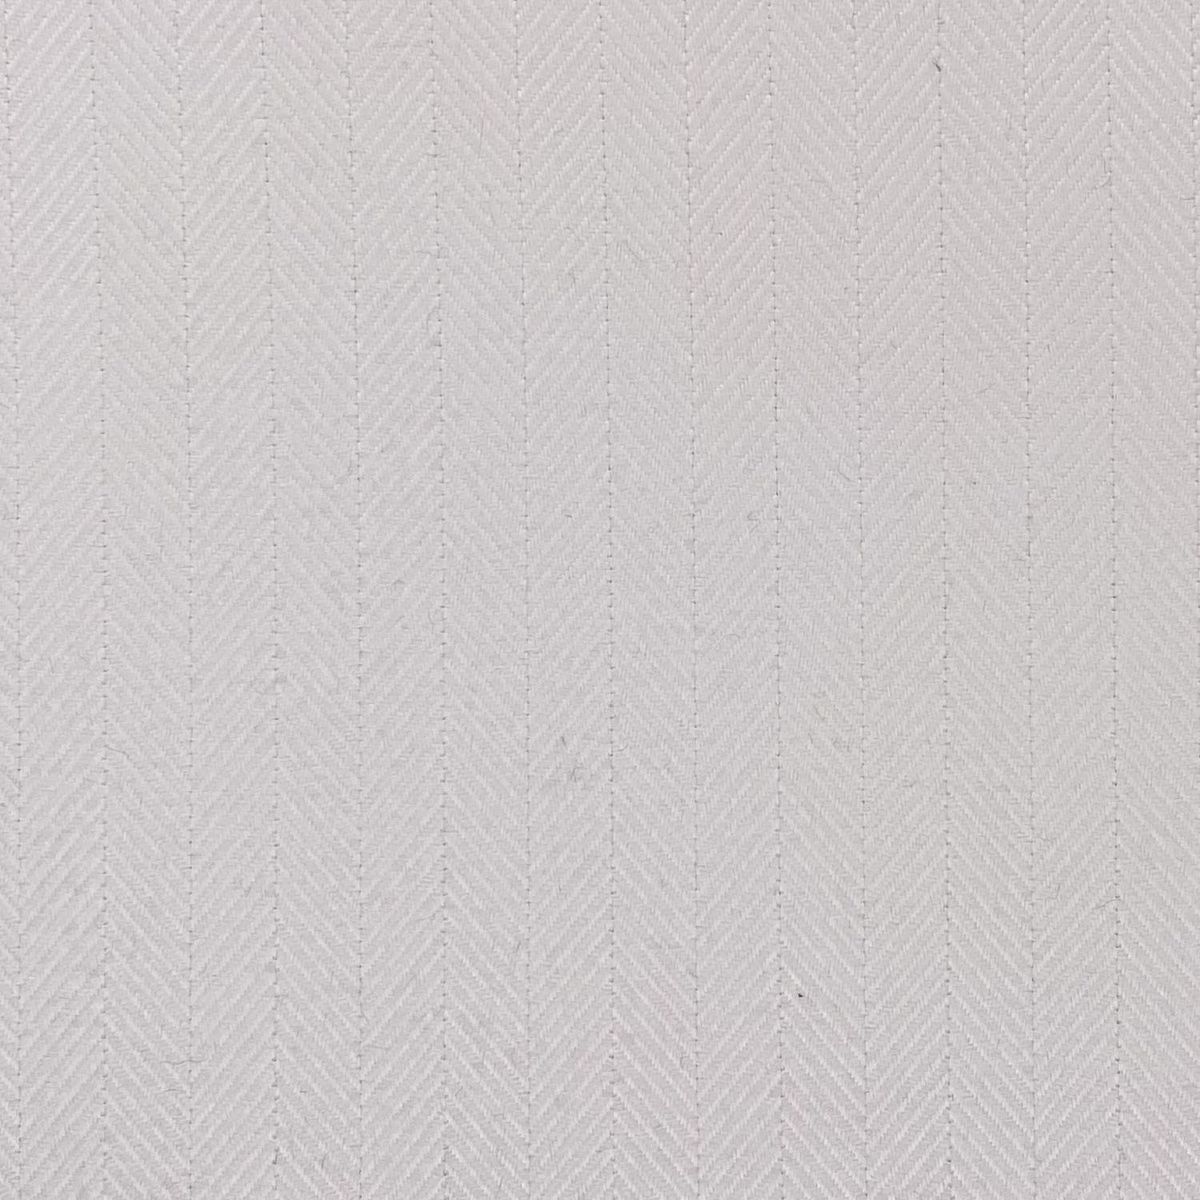 Tweed White Fabric by Chatham Glyn